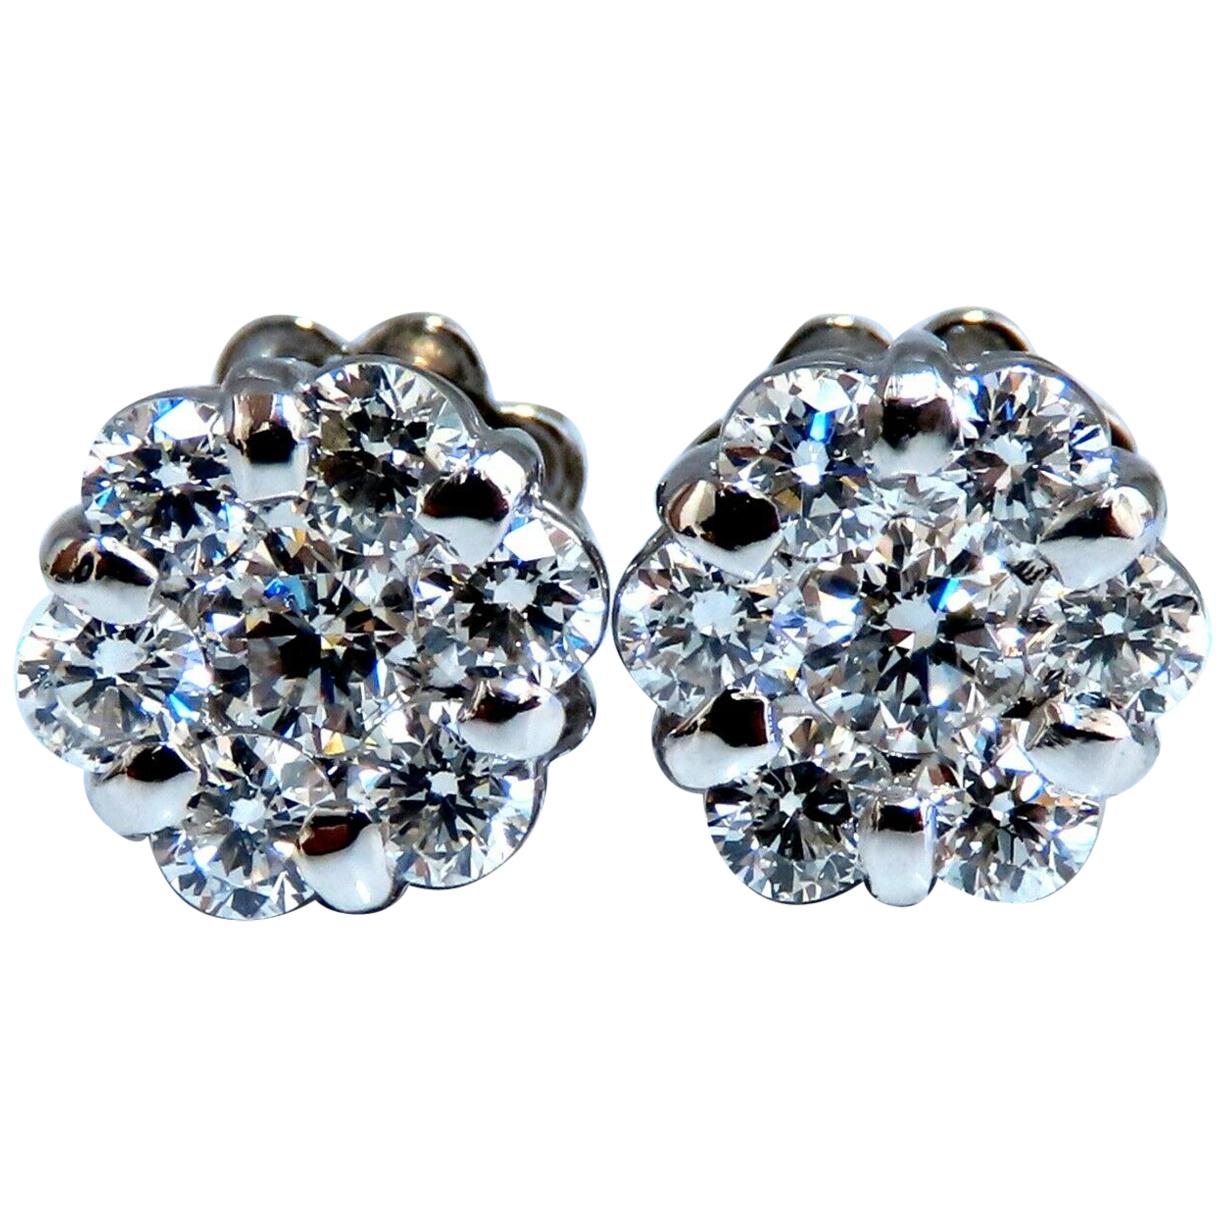 1.10 Carat Natural Diamonds Cluster Earrings 14 Karat